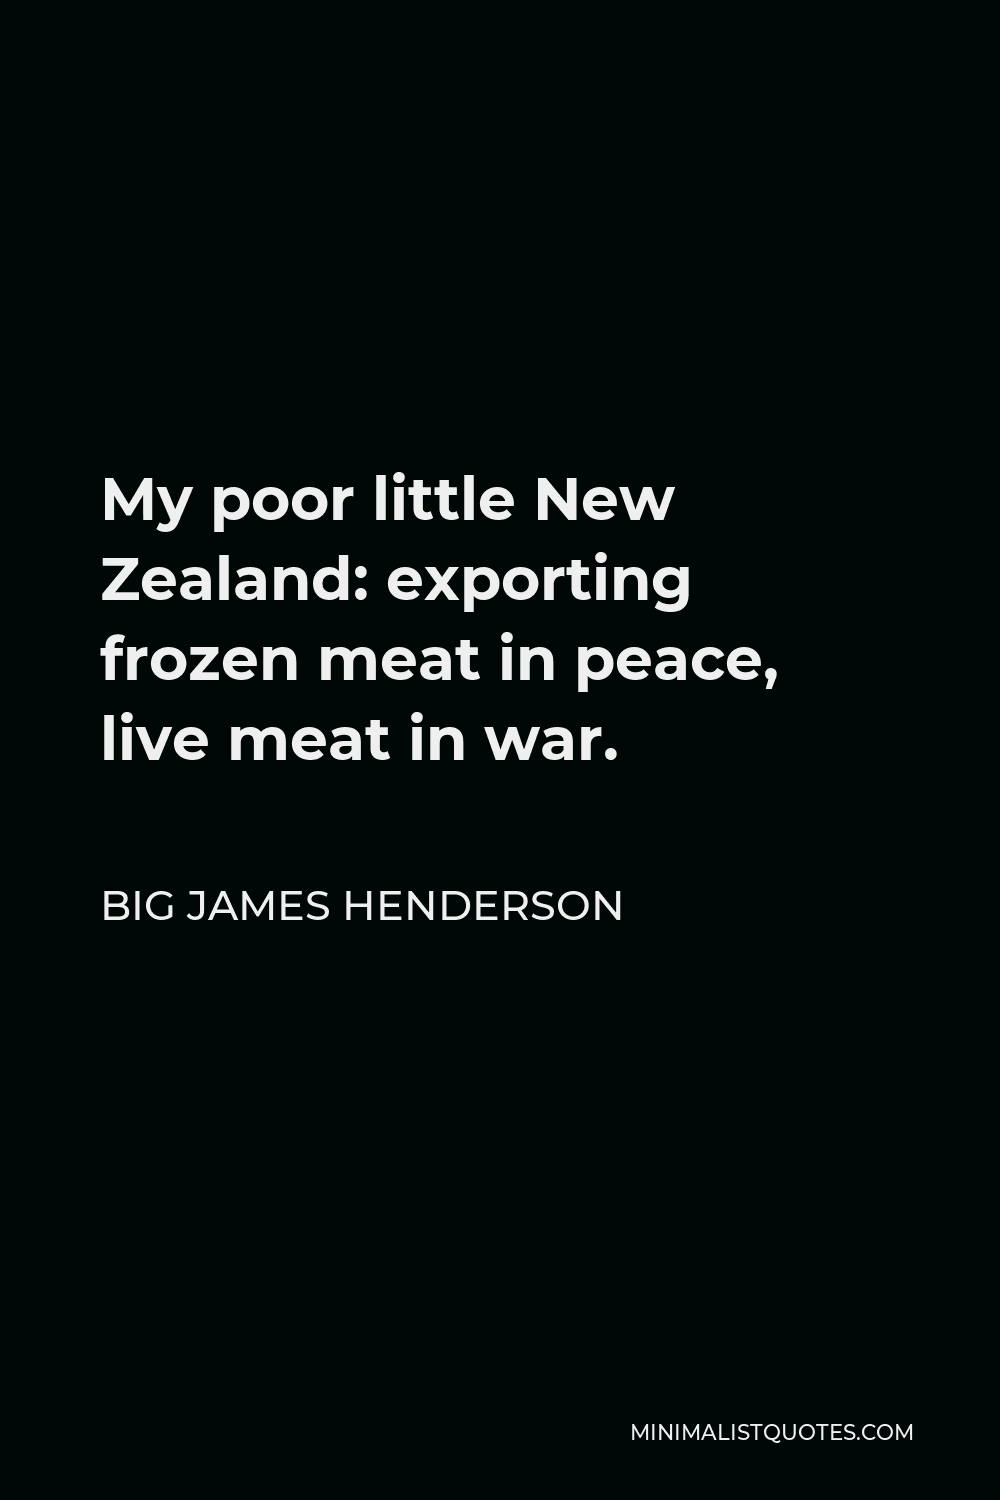 Big James Henderson Quote - My poor little New Zealand: exporting frozen meat in peace, live meat in war.